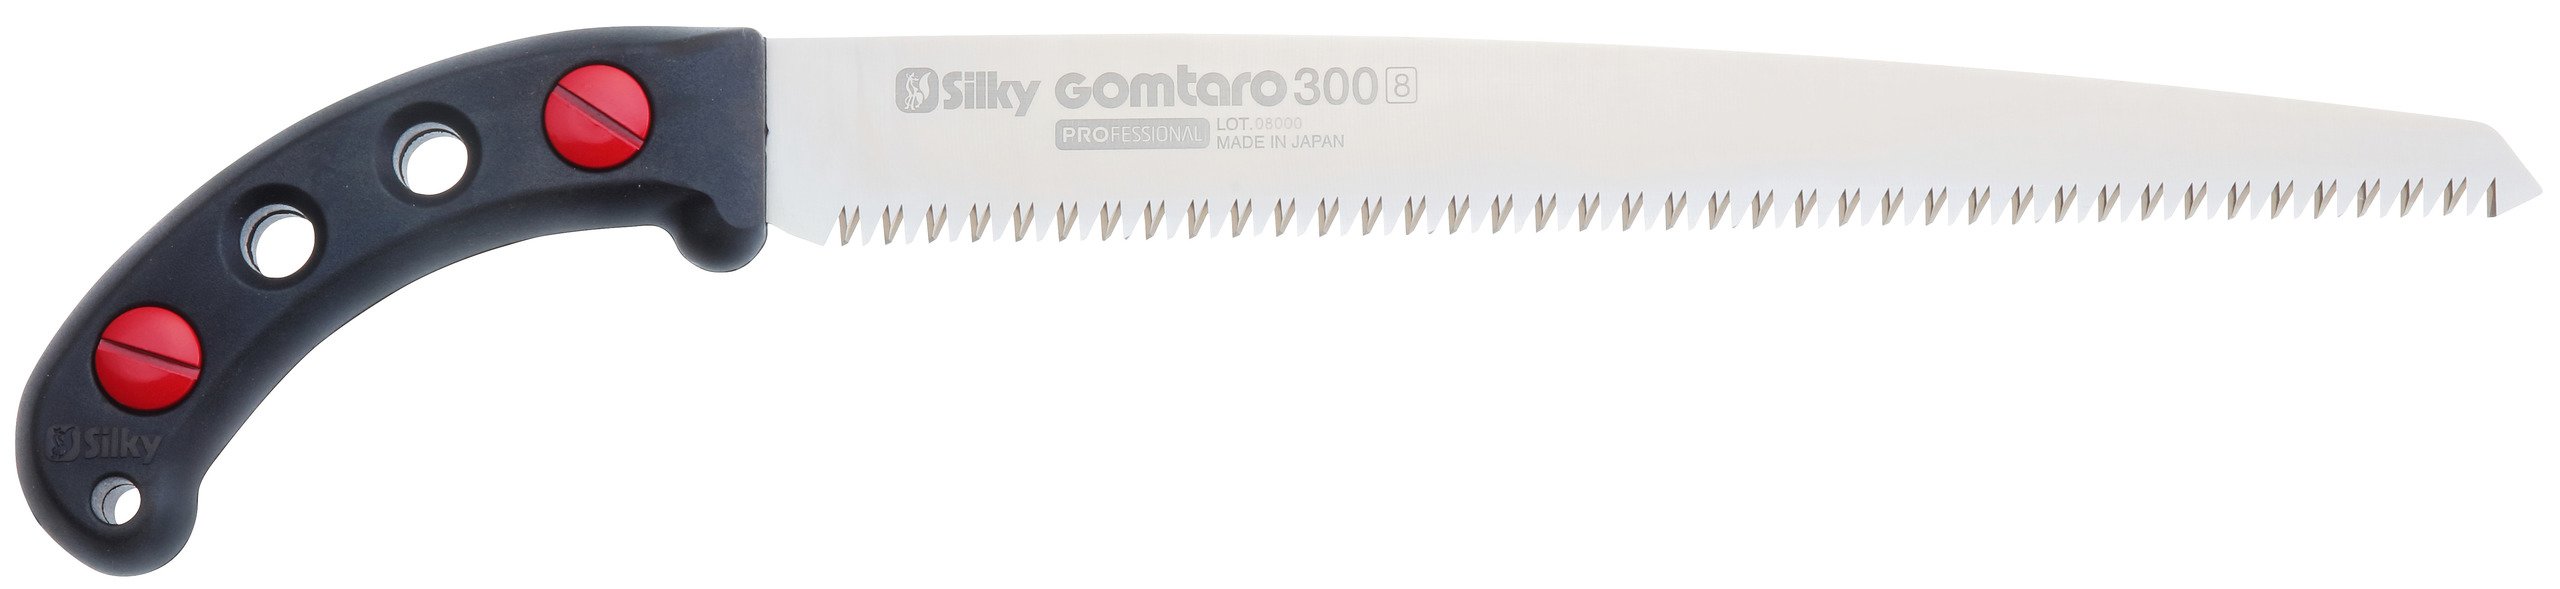 Silky Handsäge Gomtaro 300-8